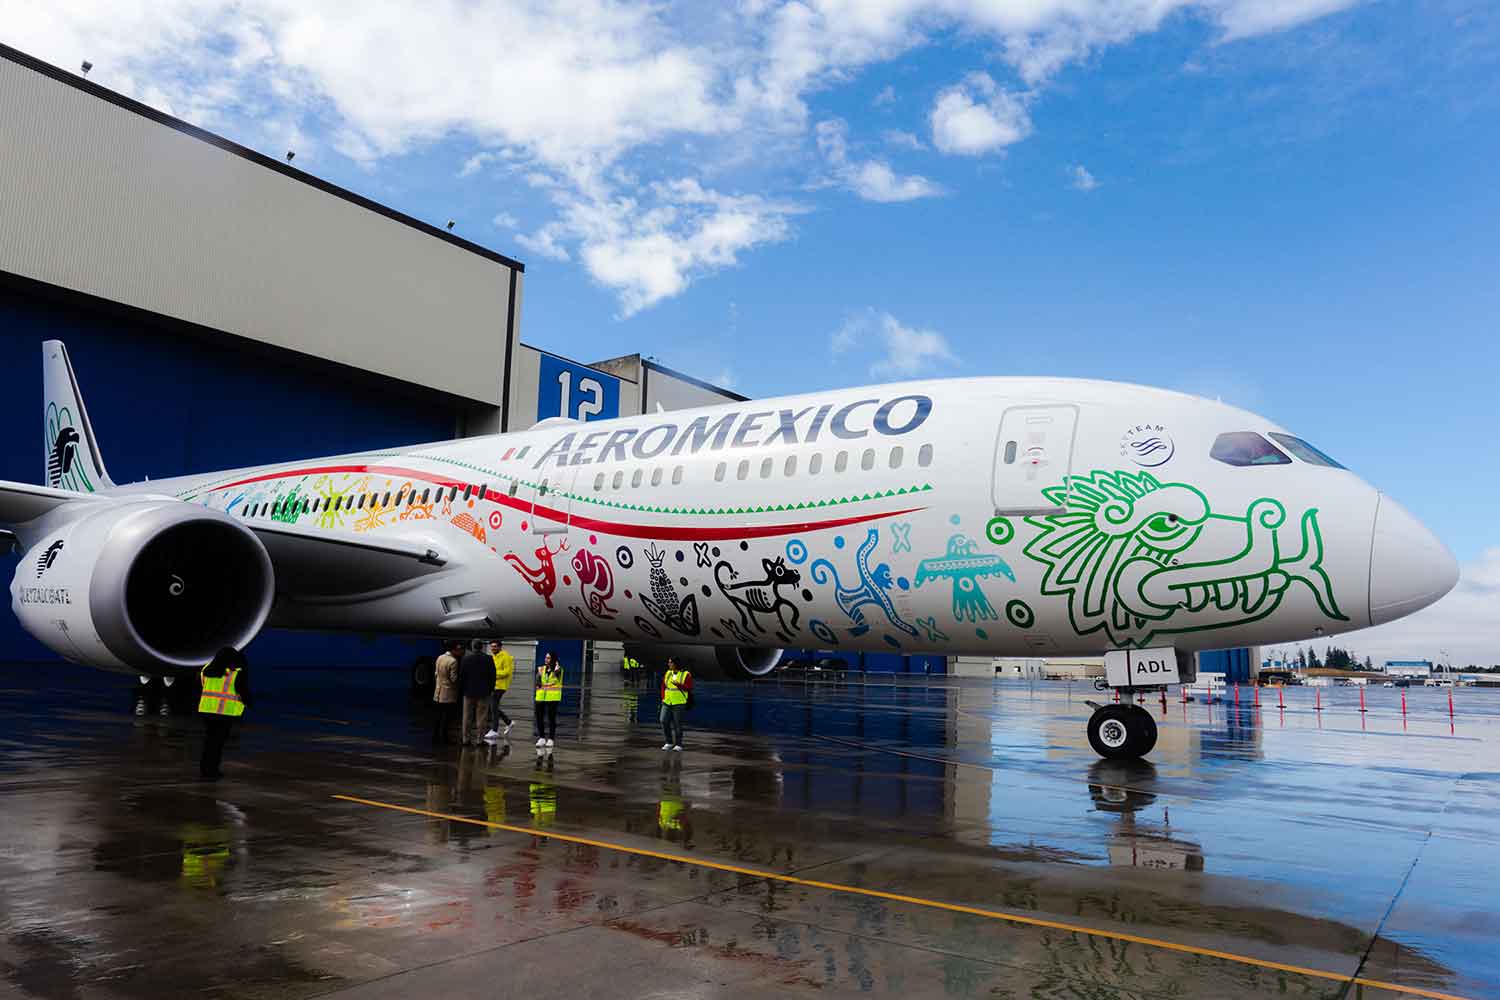 aeromexico dreamliner quetzalcoatl